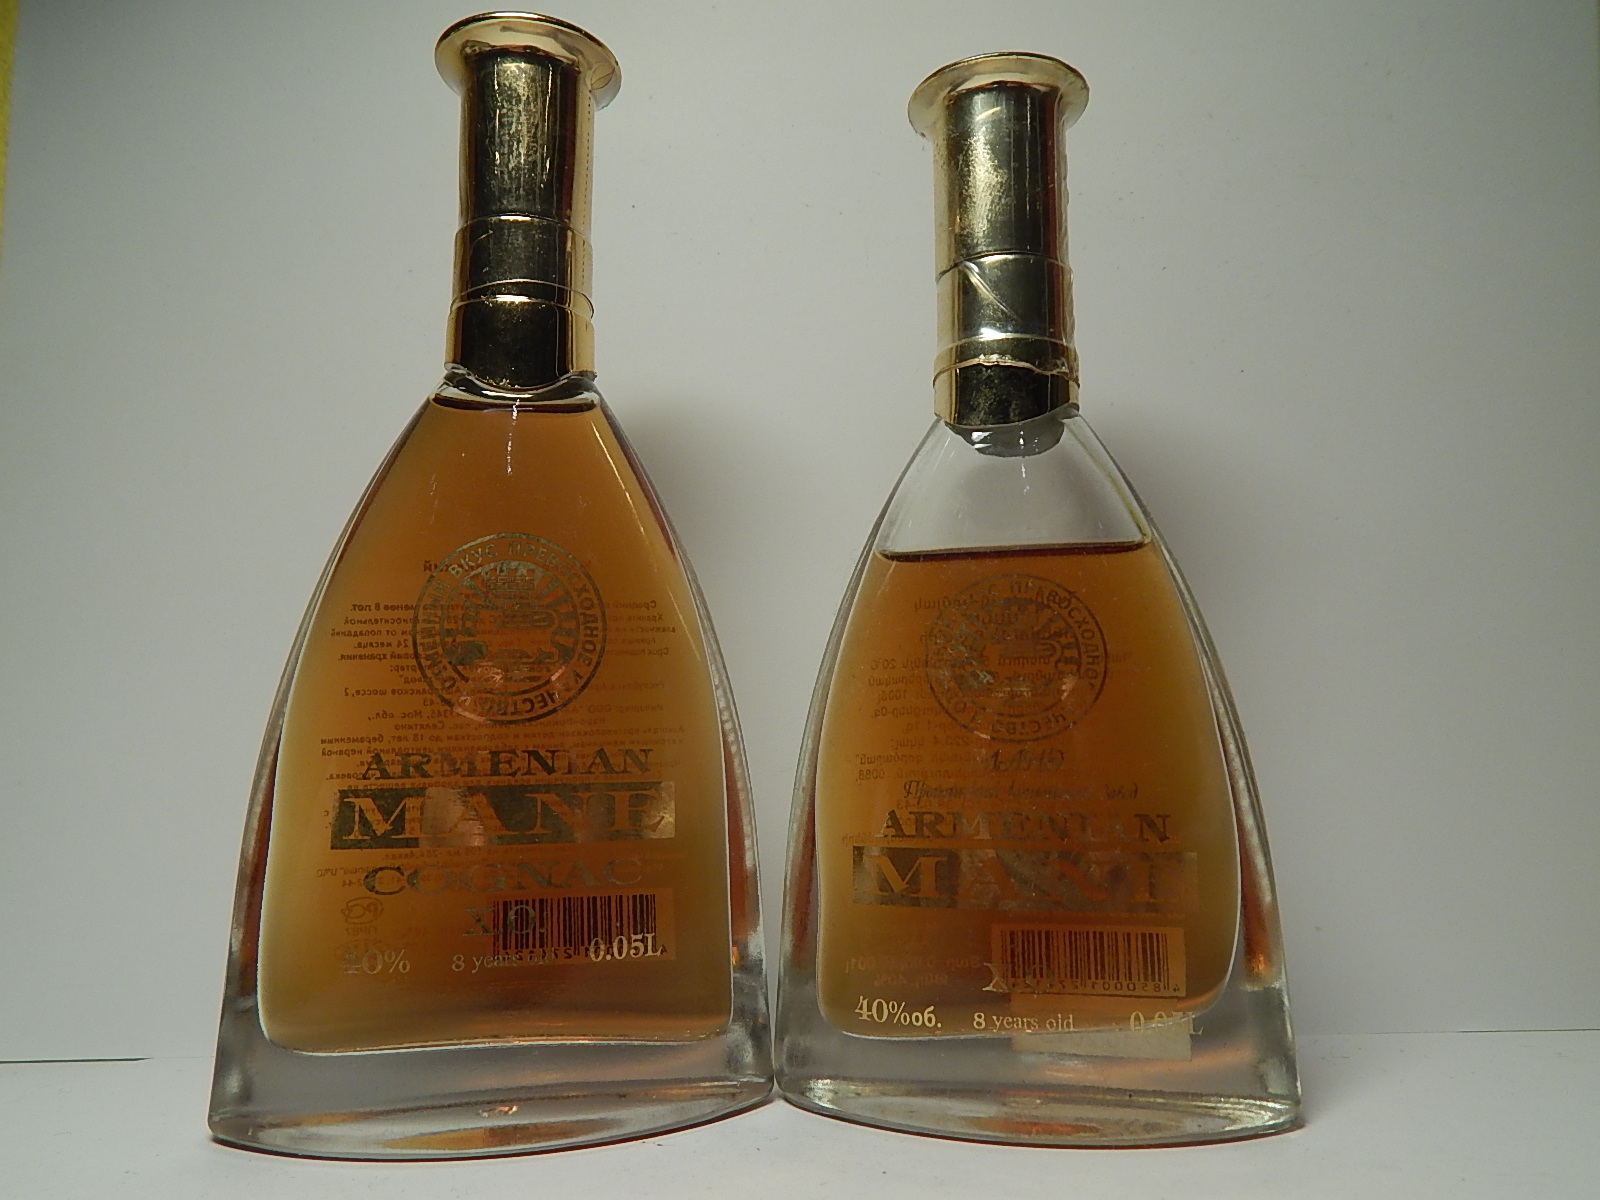 MANE X.O. 8yo Cognac "Armenia"